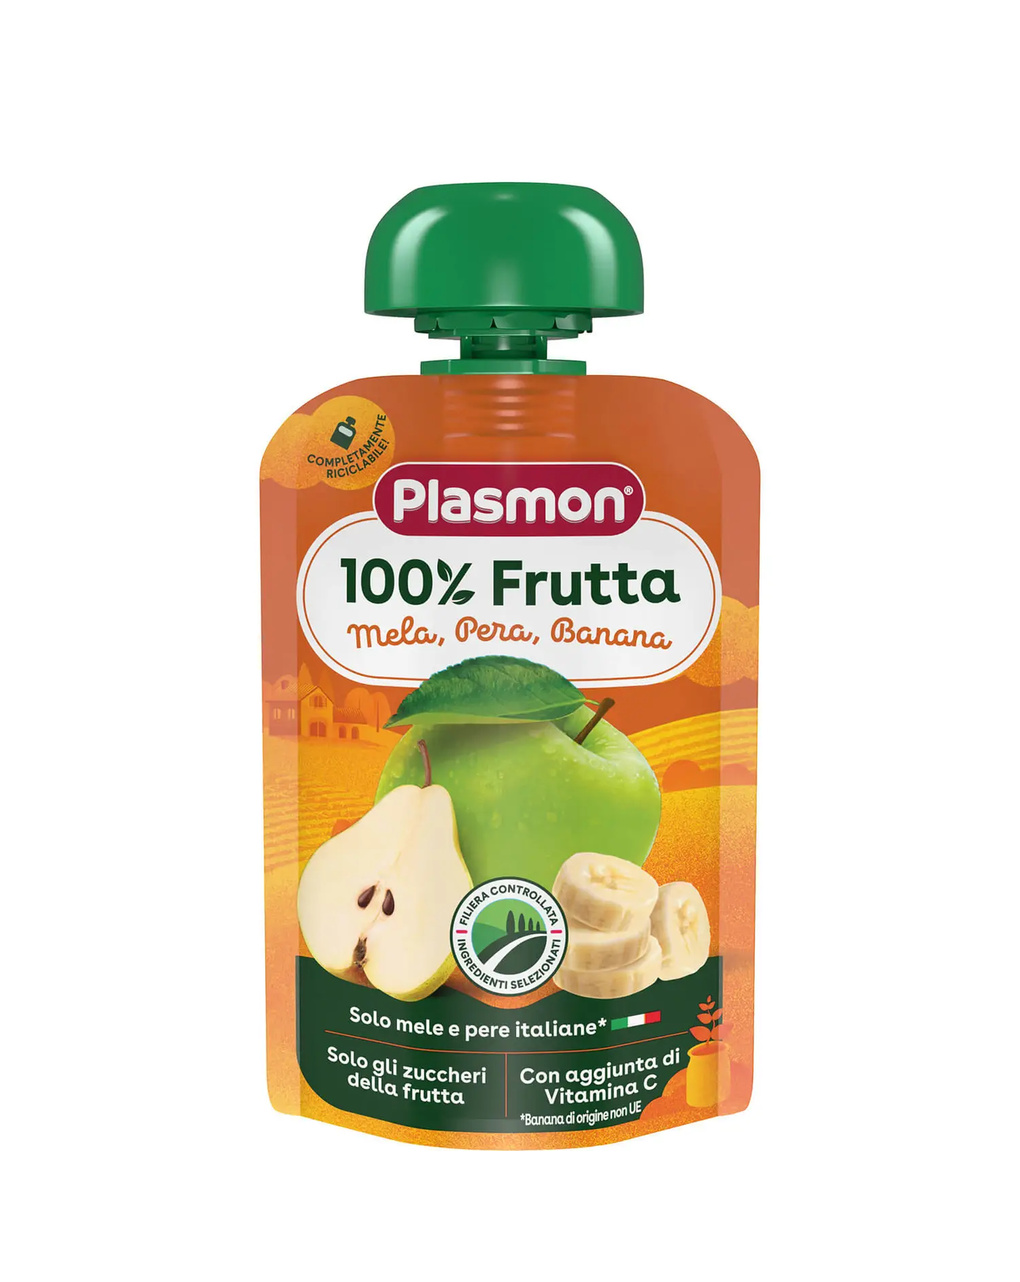 Plasmon - spremi e gusta frutta mista 100g - Plasmon